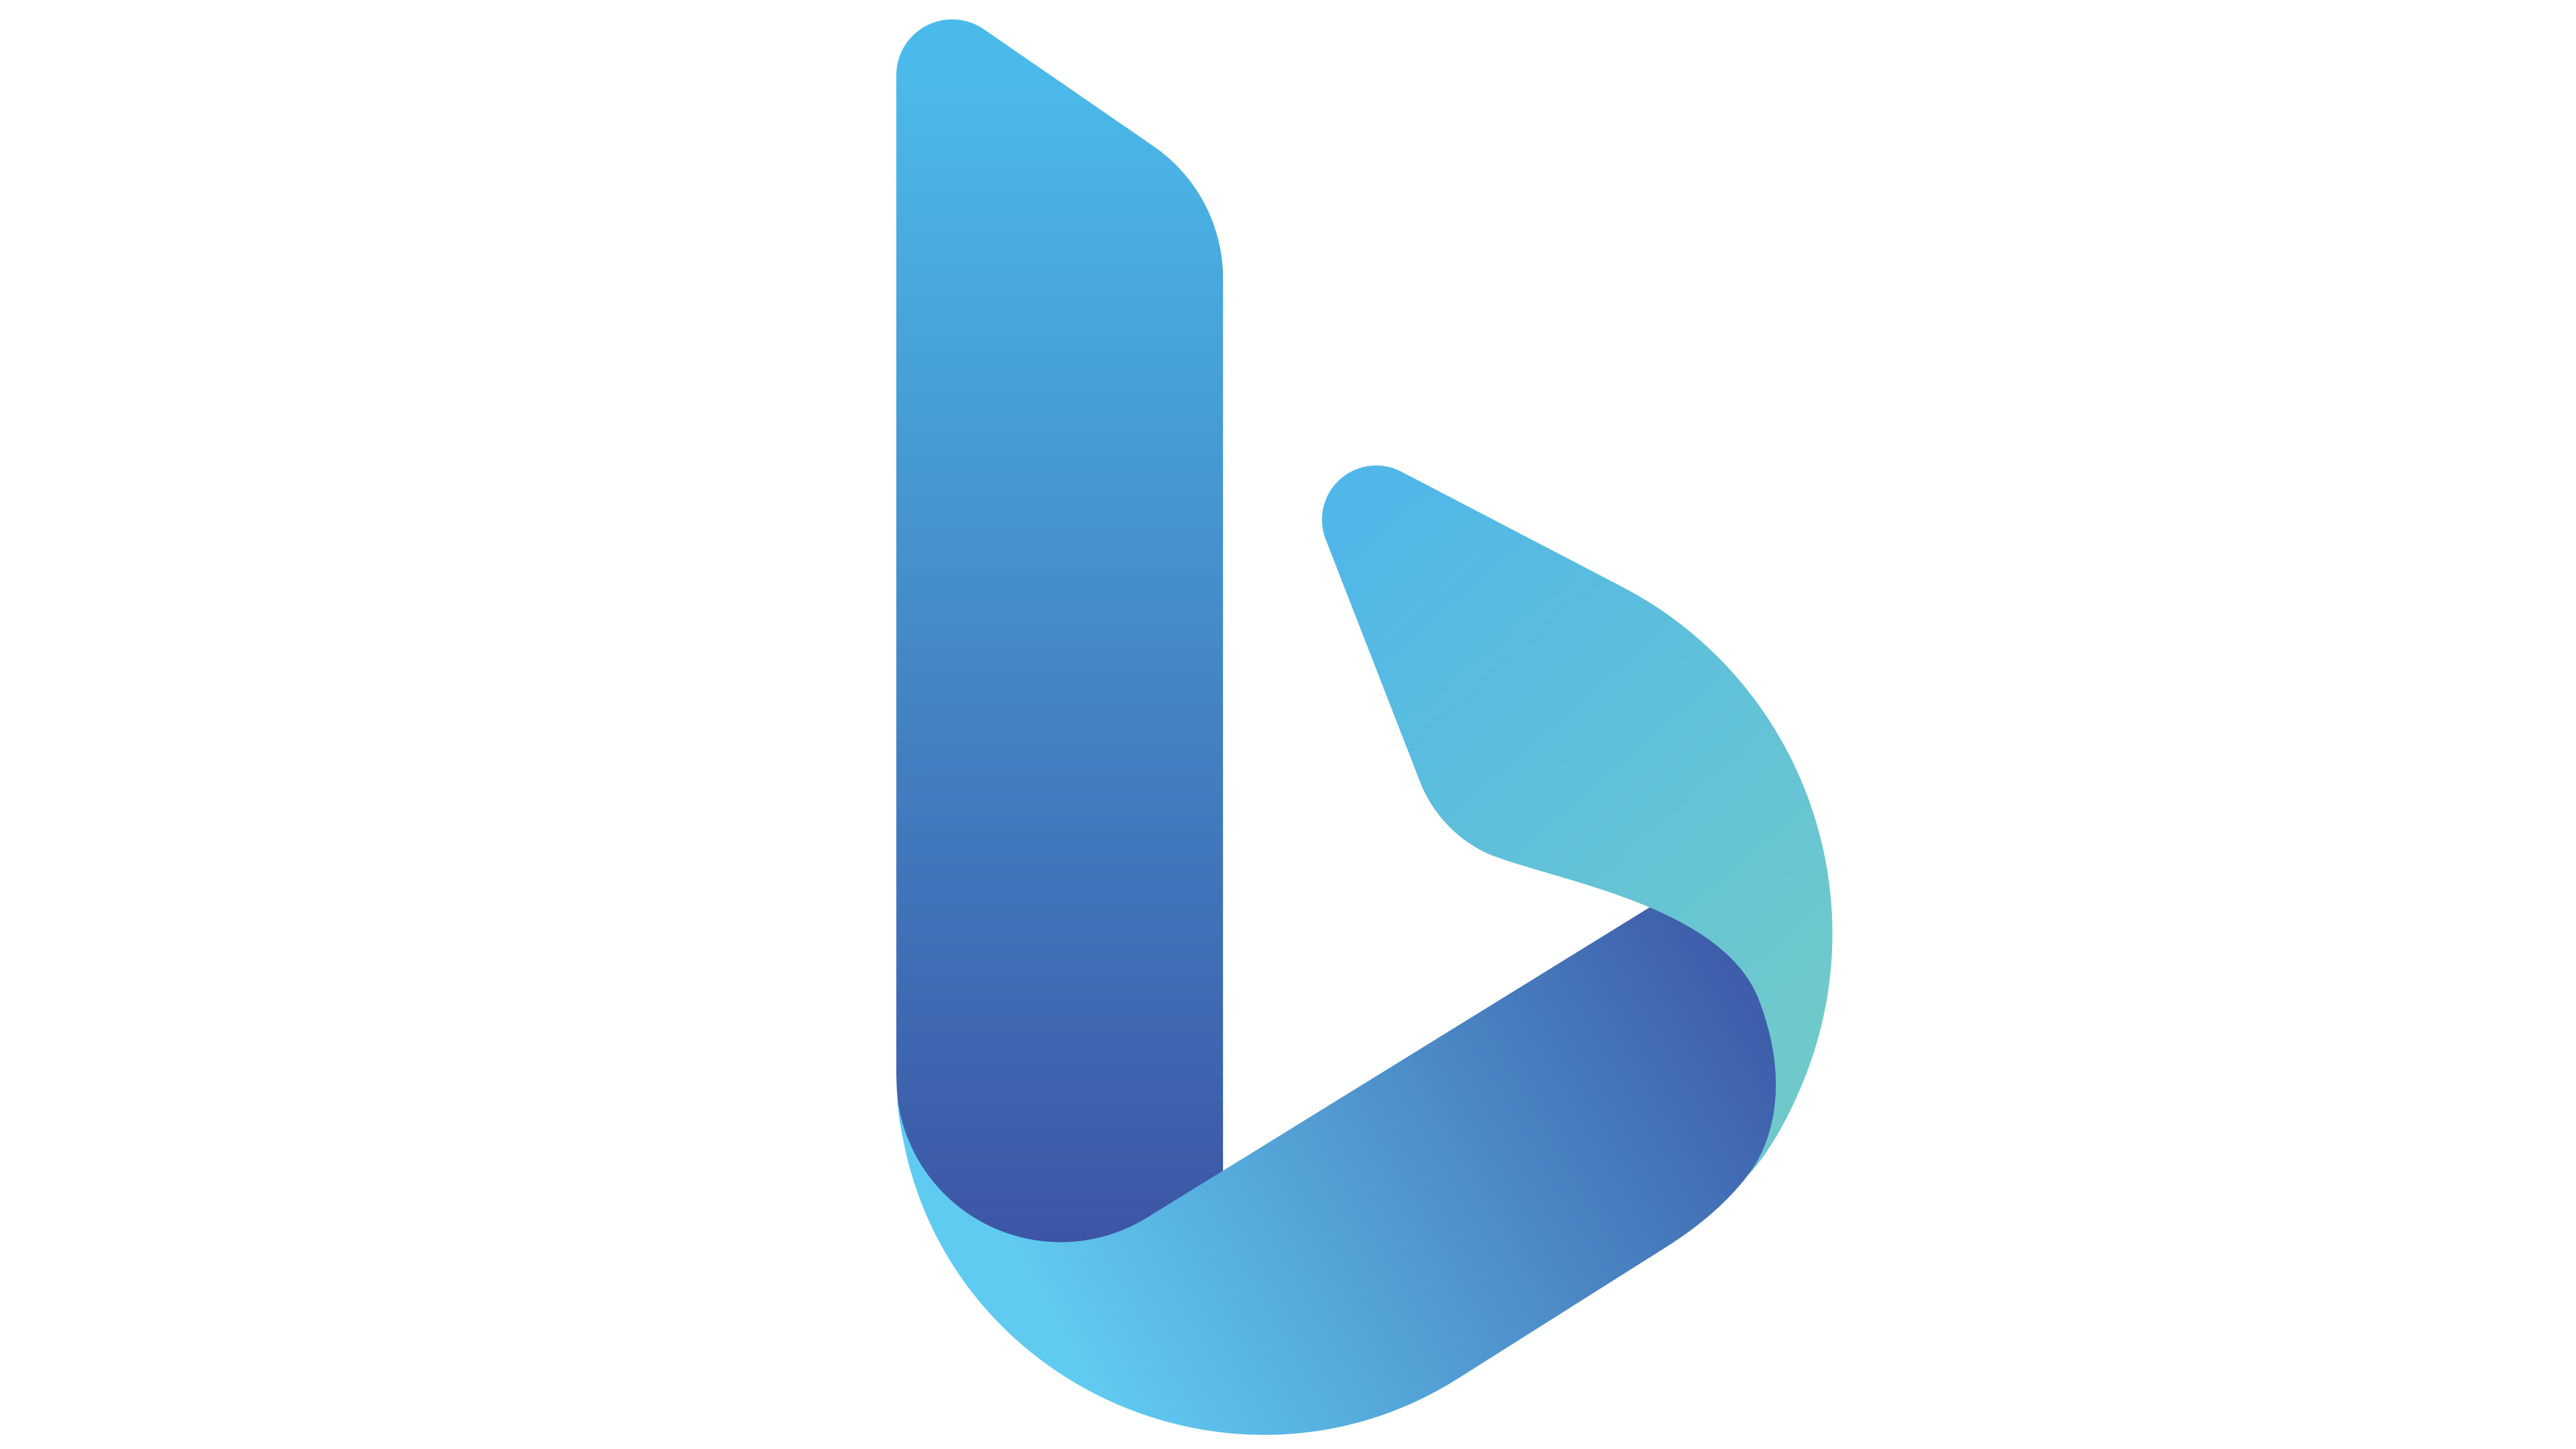 Microsoft Bing Original Logo Images And Photos Finder